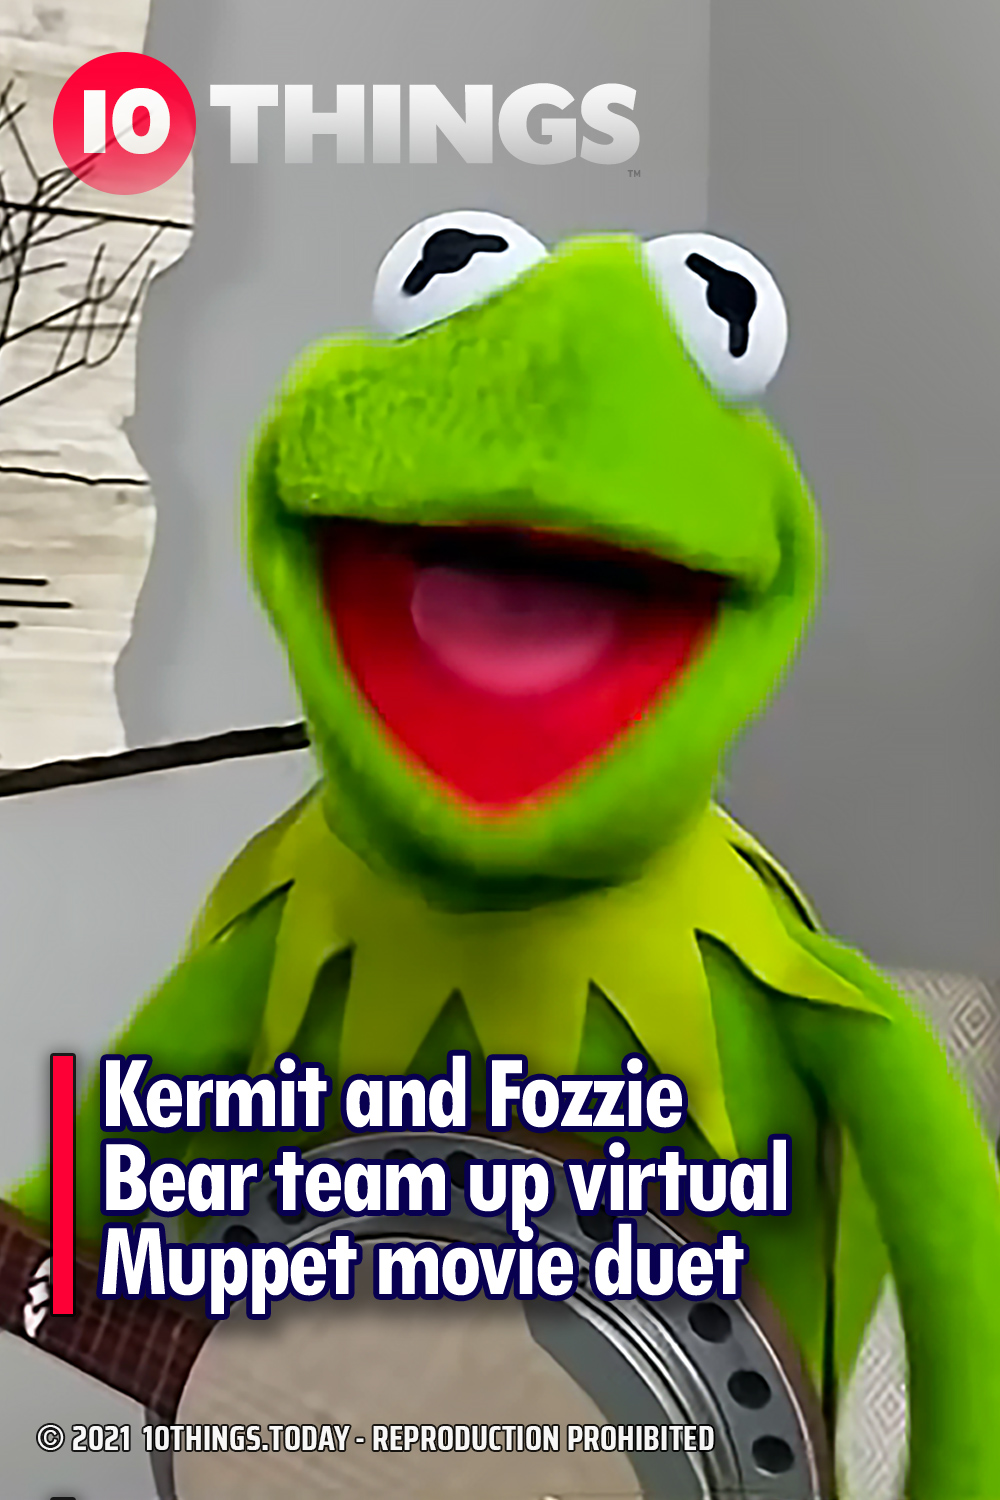 Kermit and Fozzie Bear team up virtual Muppet movie duet